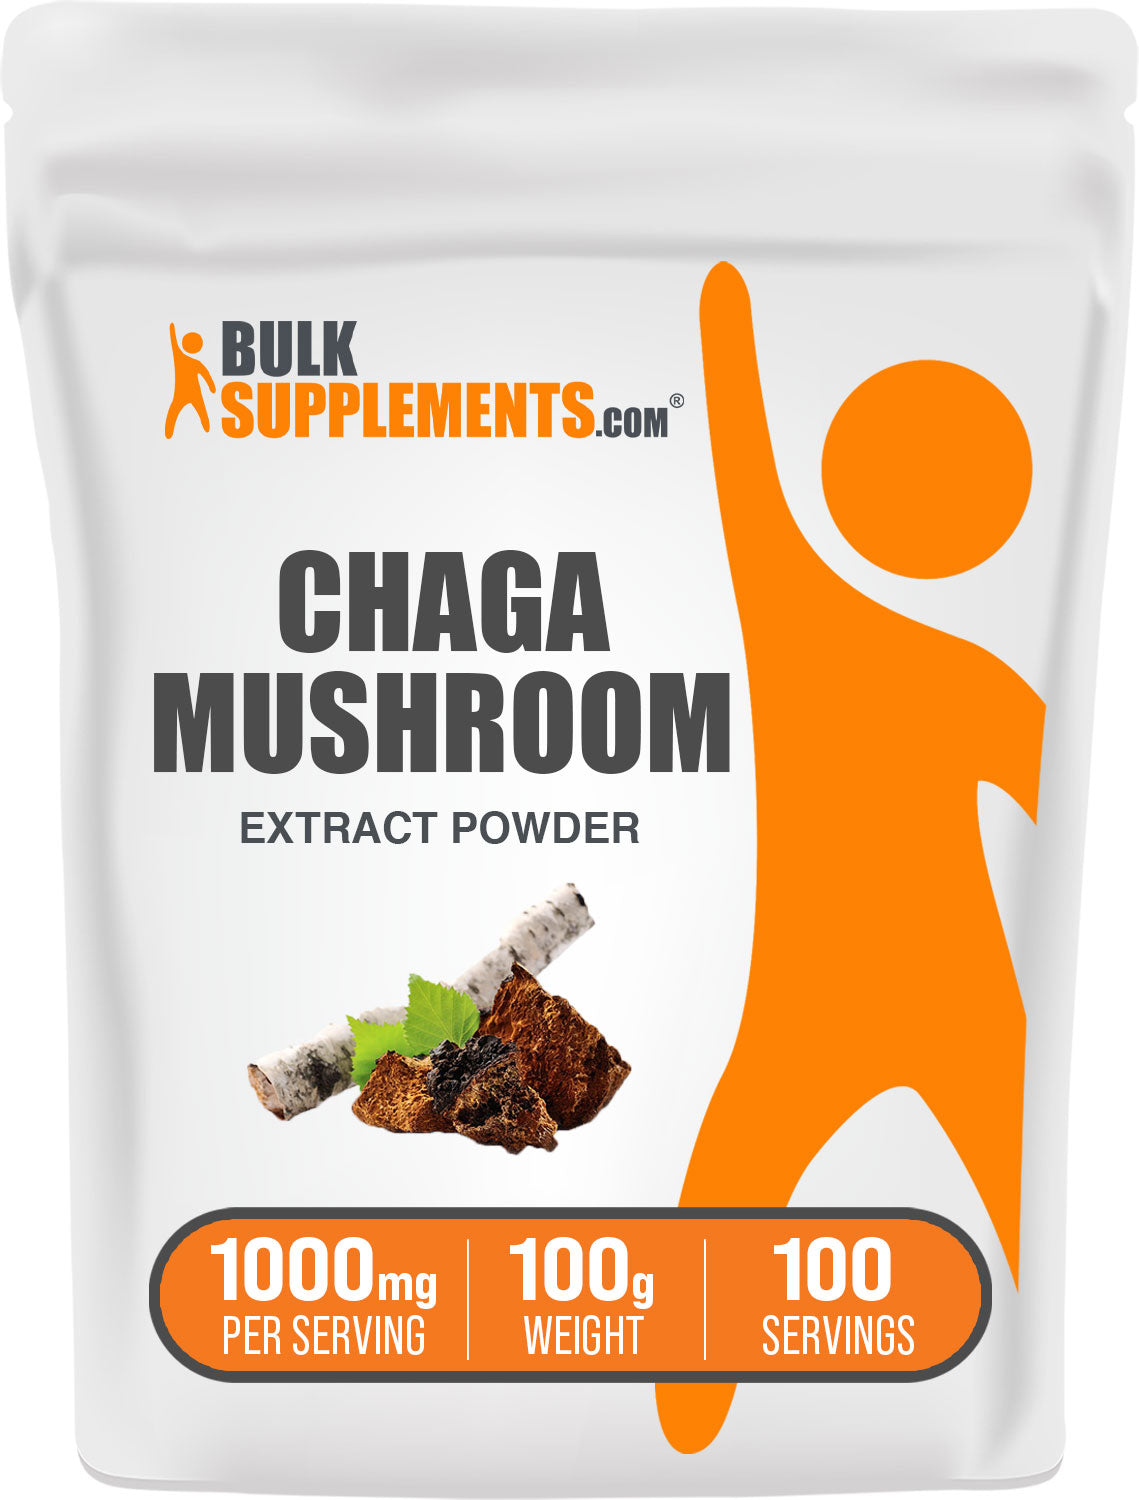 100g of chaga mushroom supplement